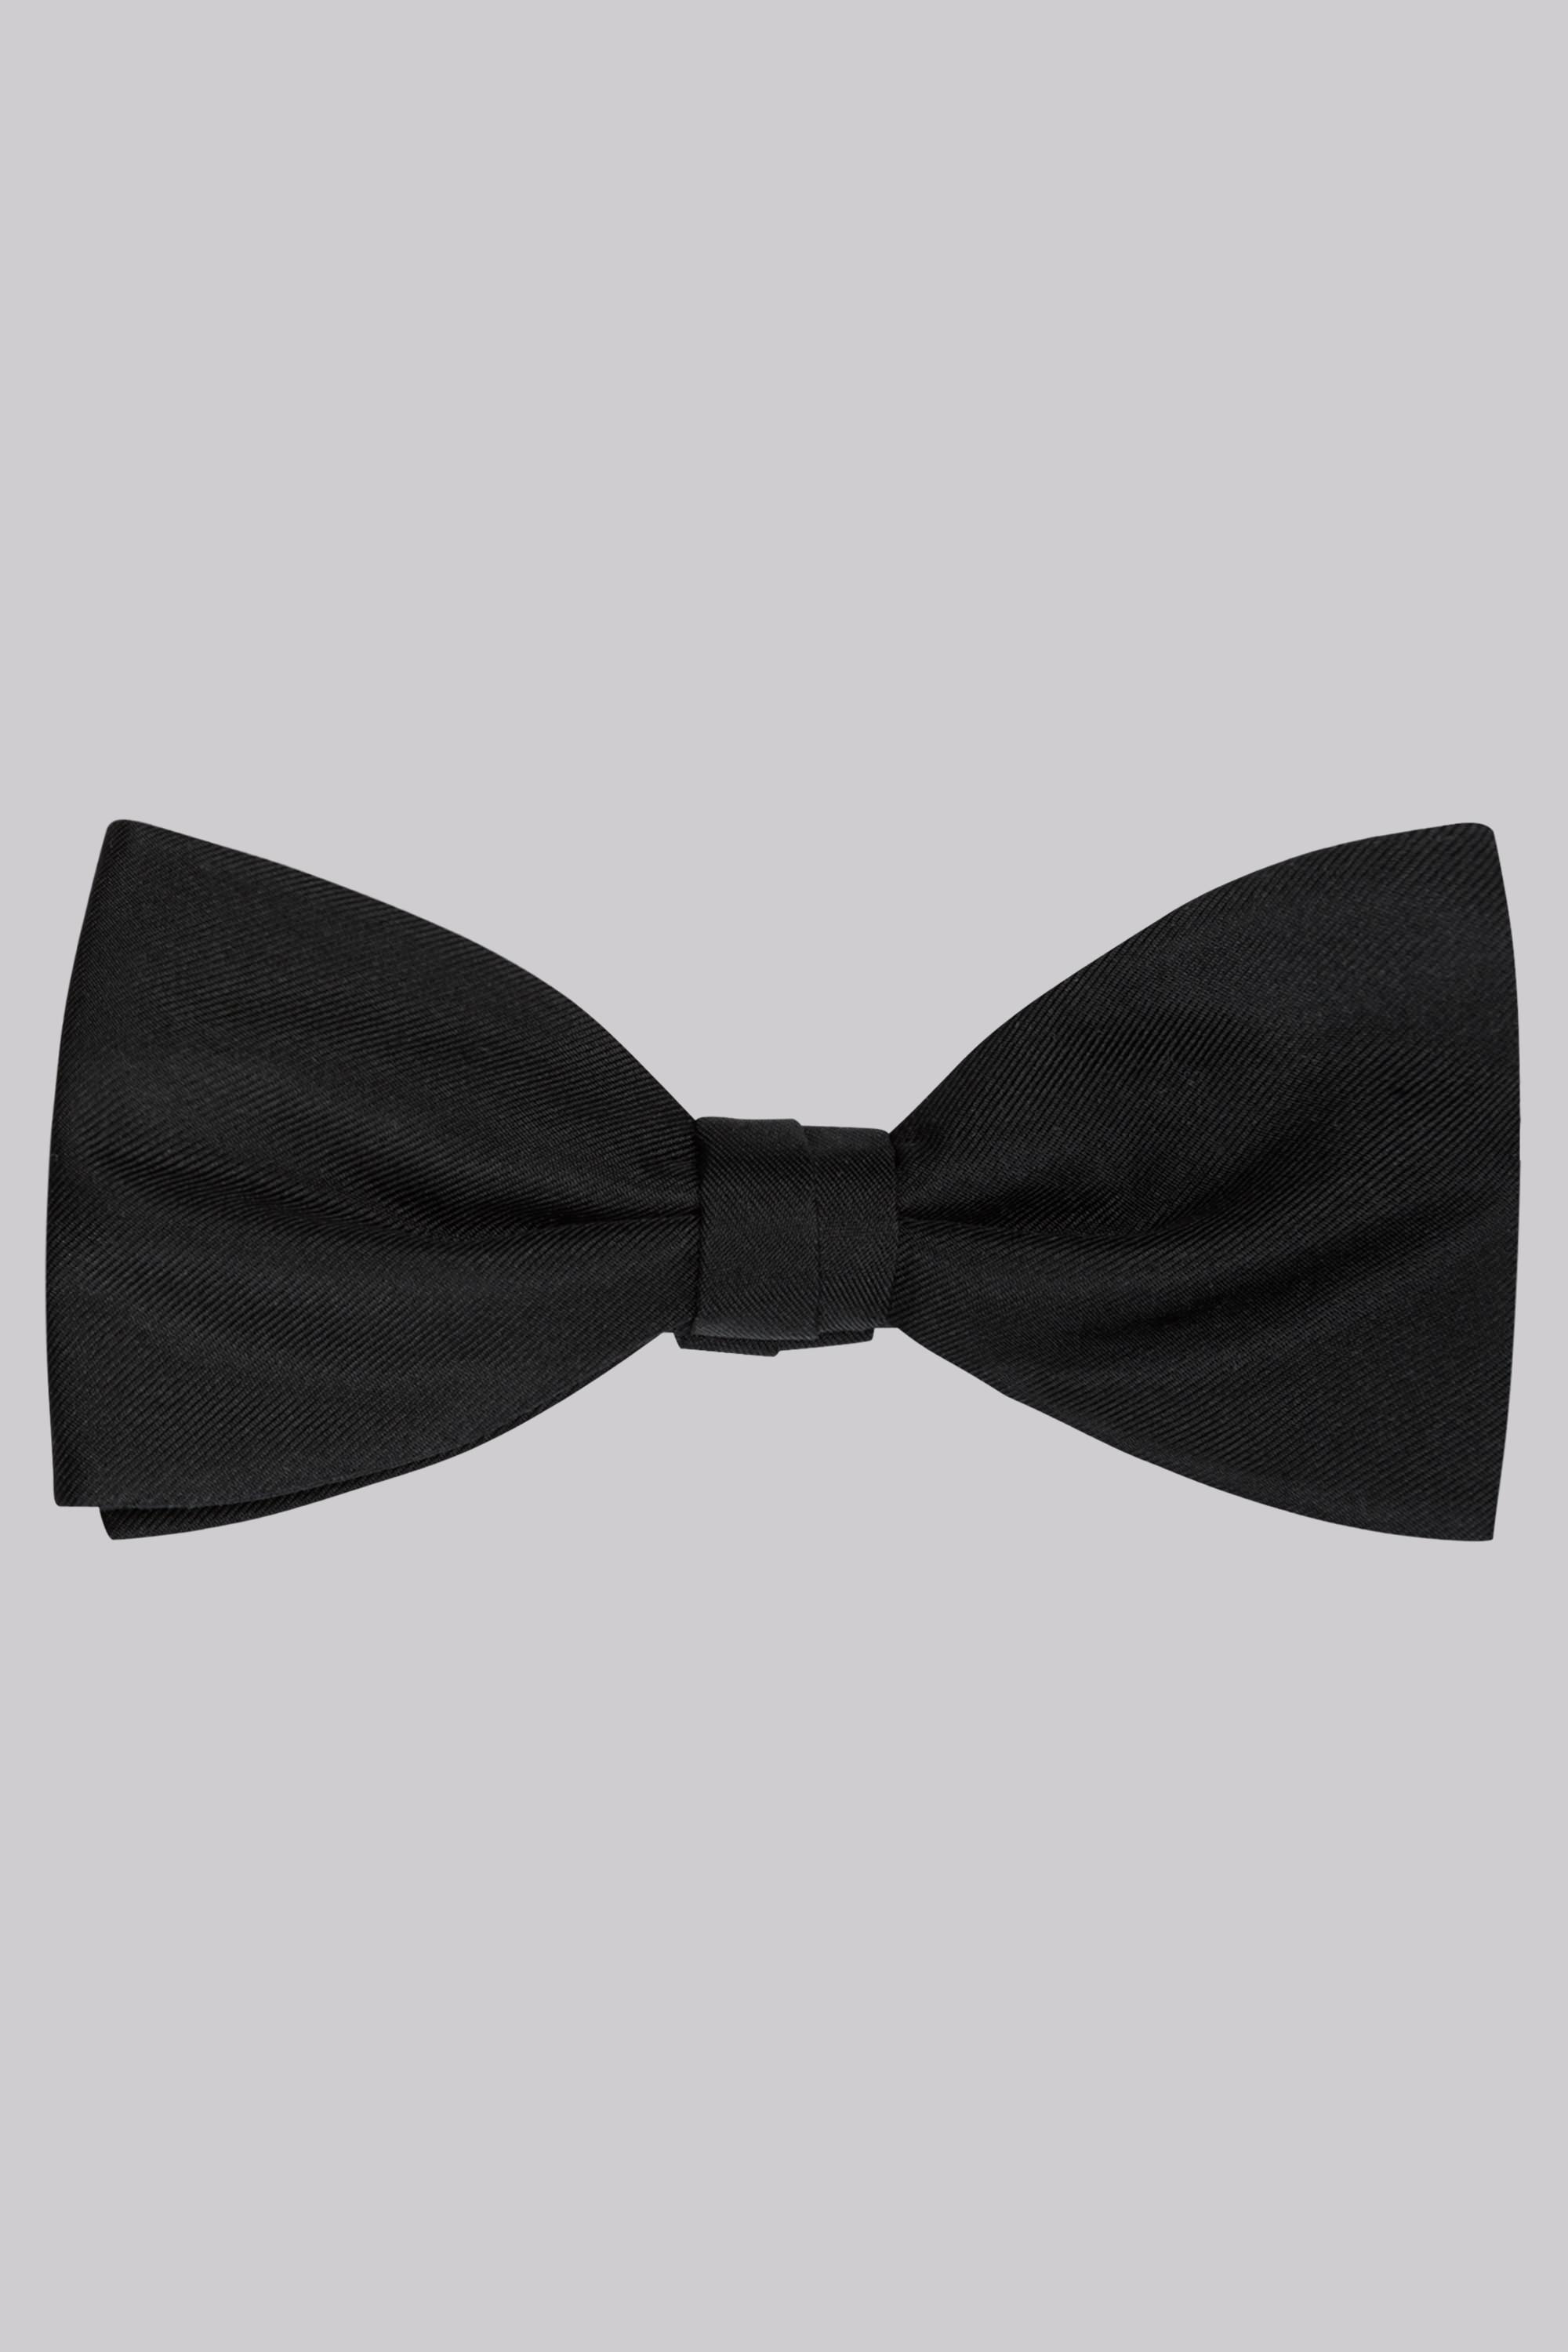 Black Silk Bow Tie | Buy Online at Moss